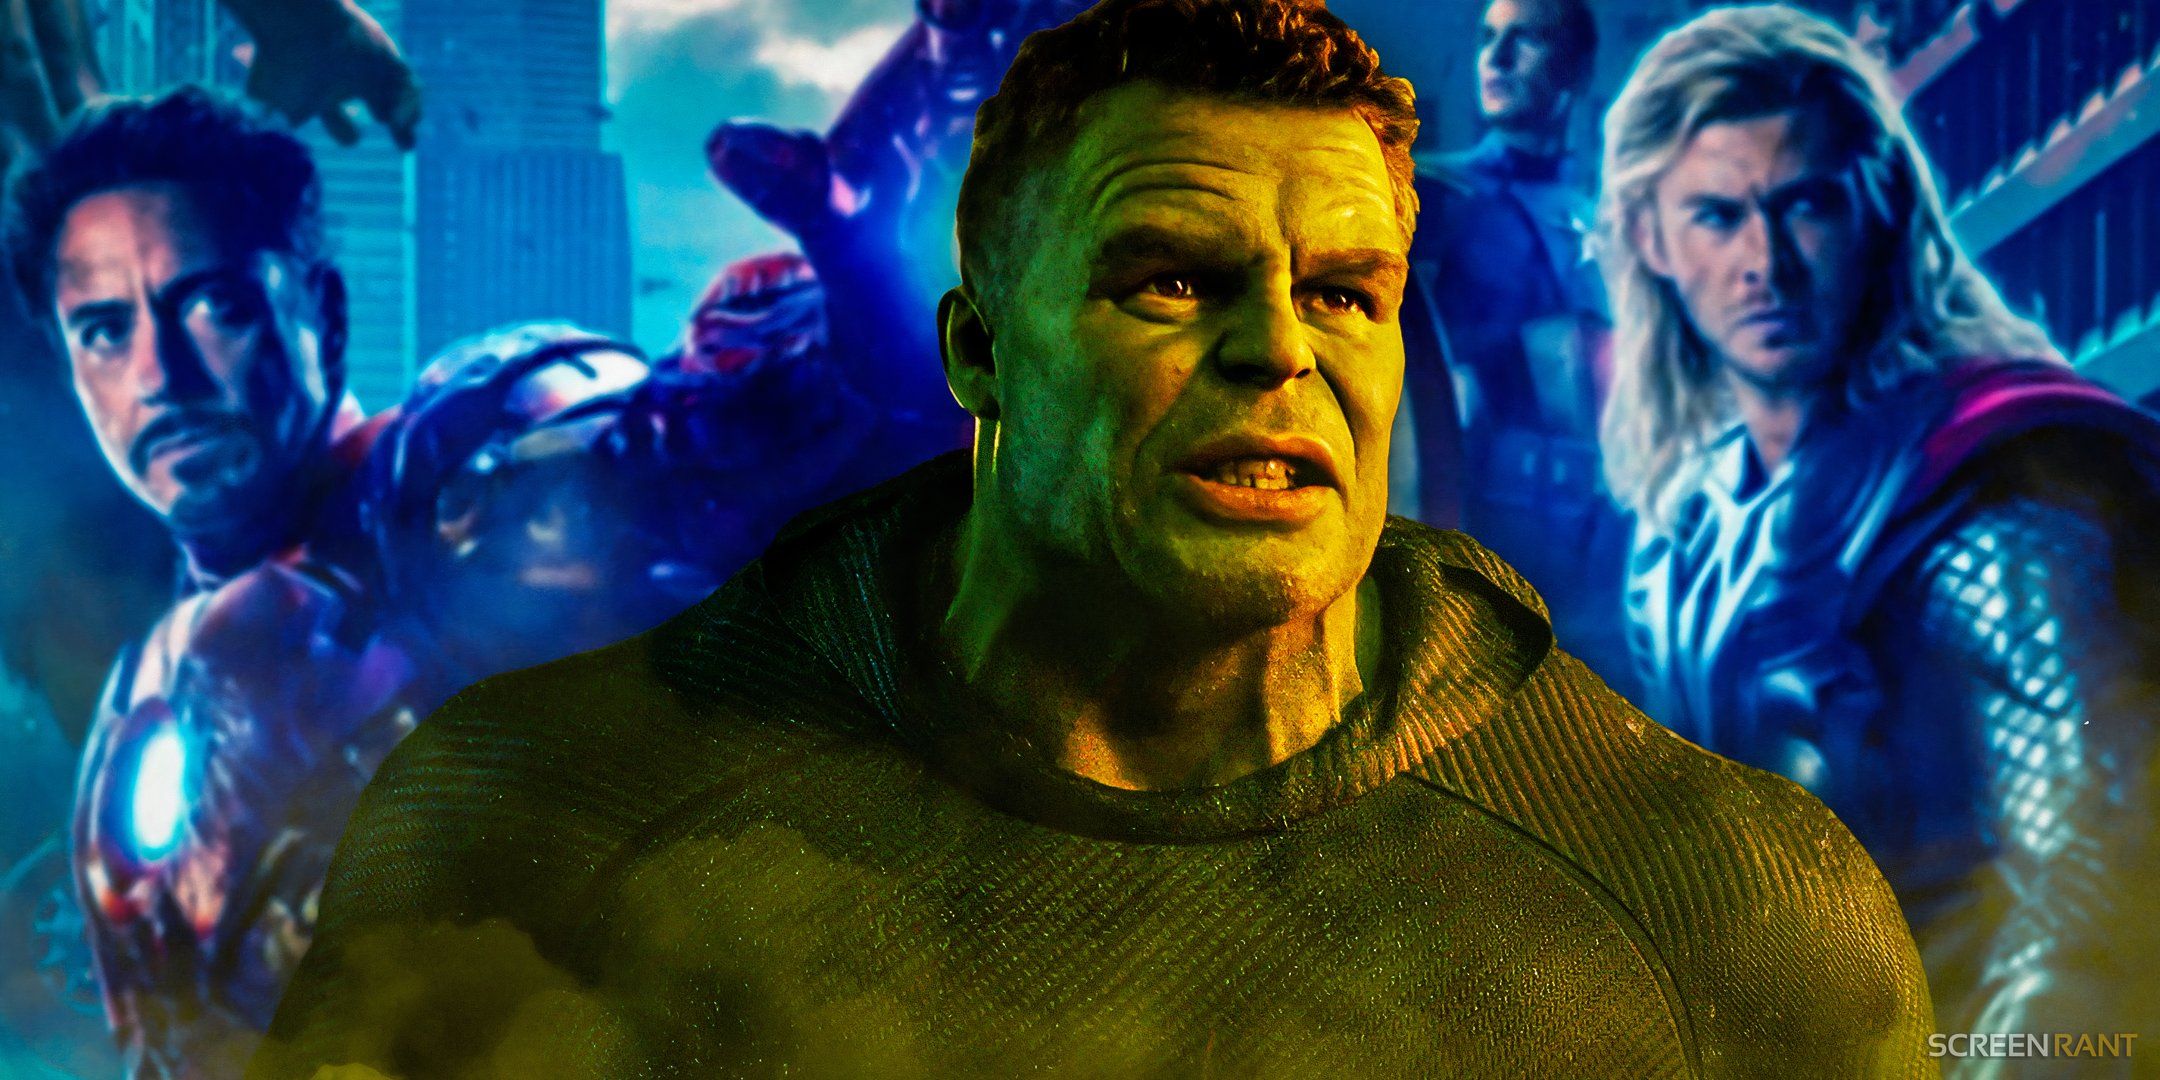 Mark Ruffalo's Hulk from Avengers: Endgame in front of the cast from The Avengers